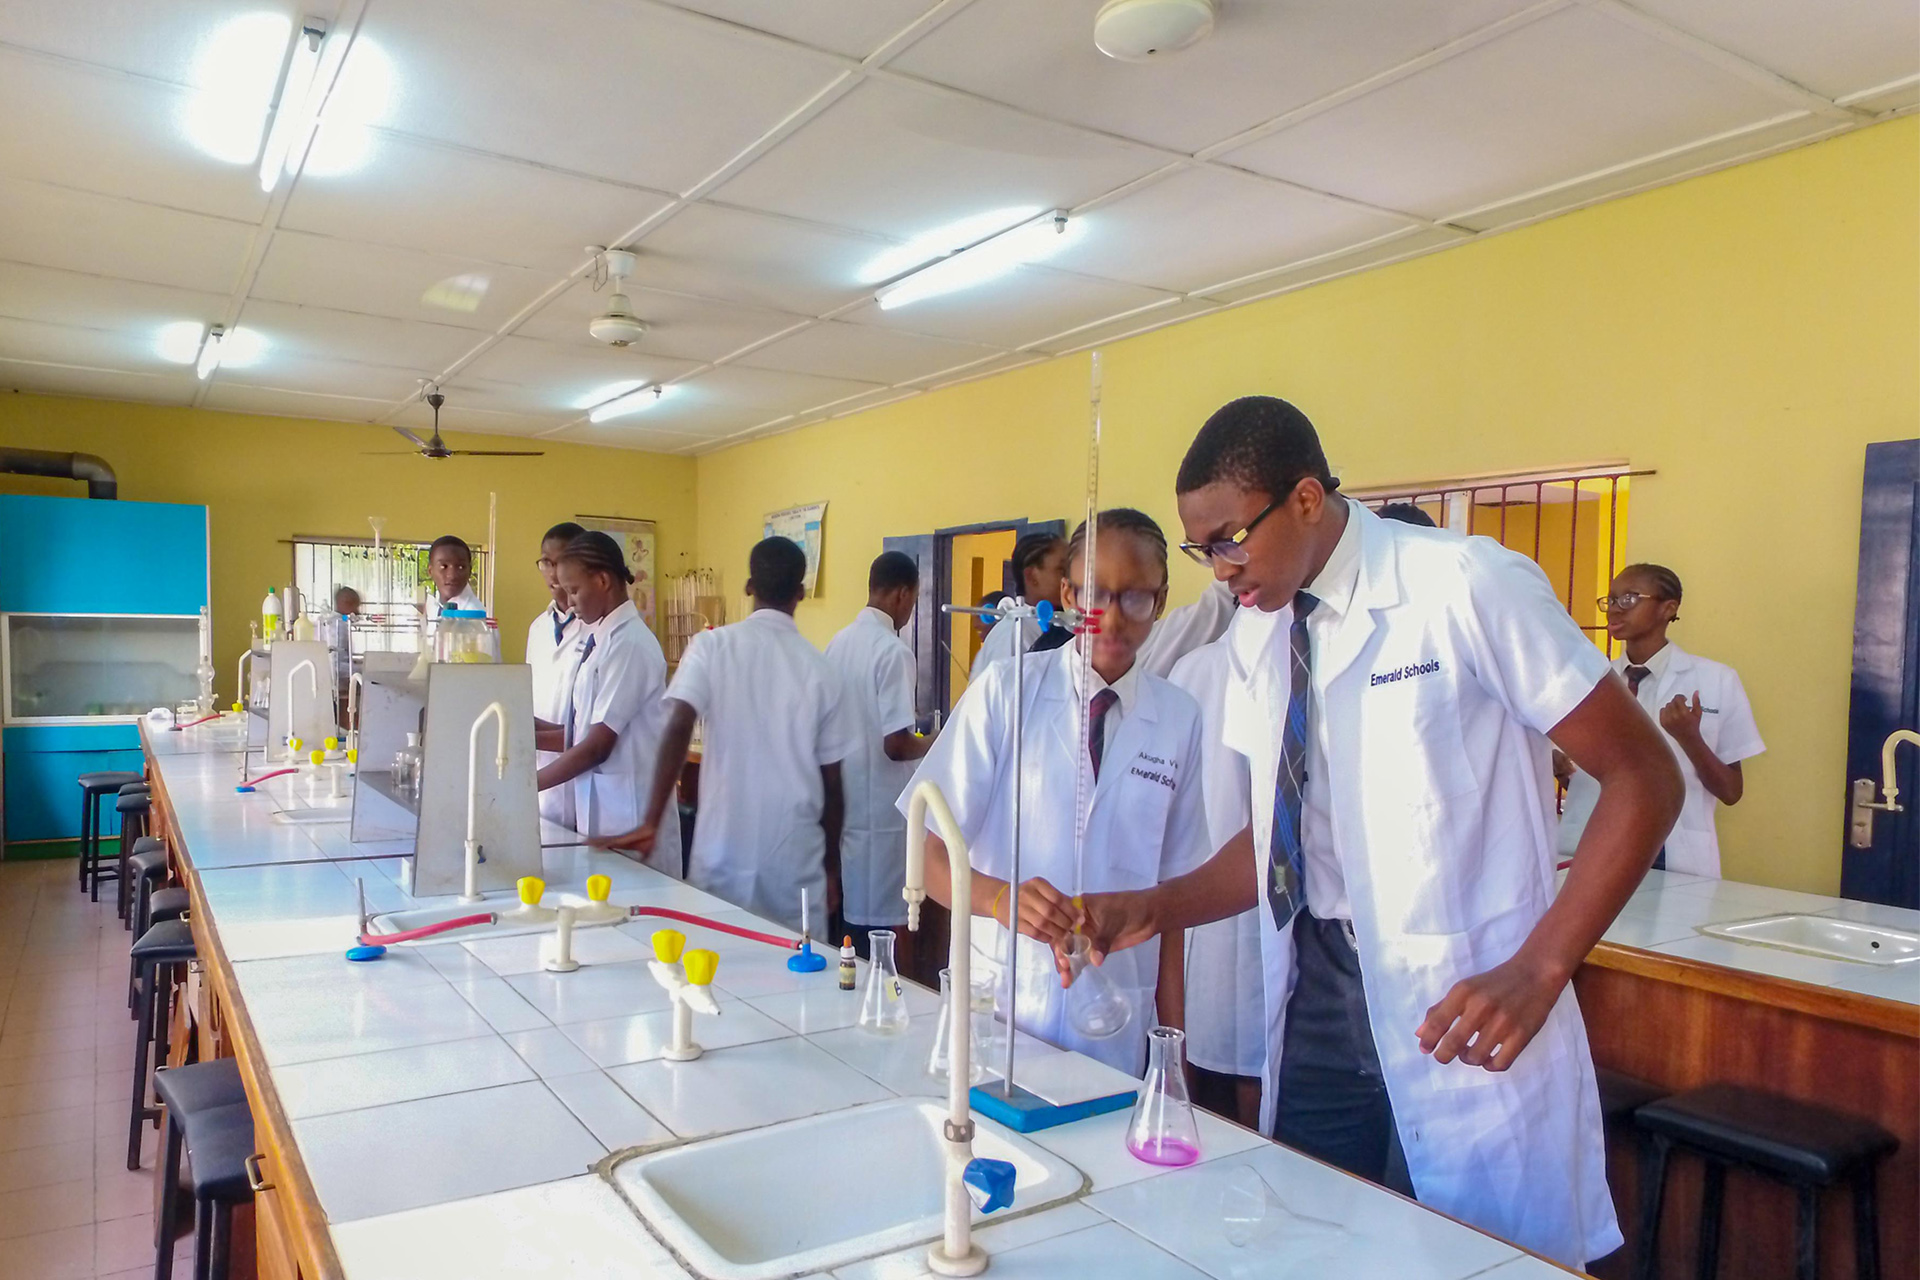 Senior Secondary school students in the Laboratory [PHOTO CREDIT: emeraldschools.com]